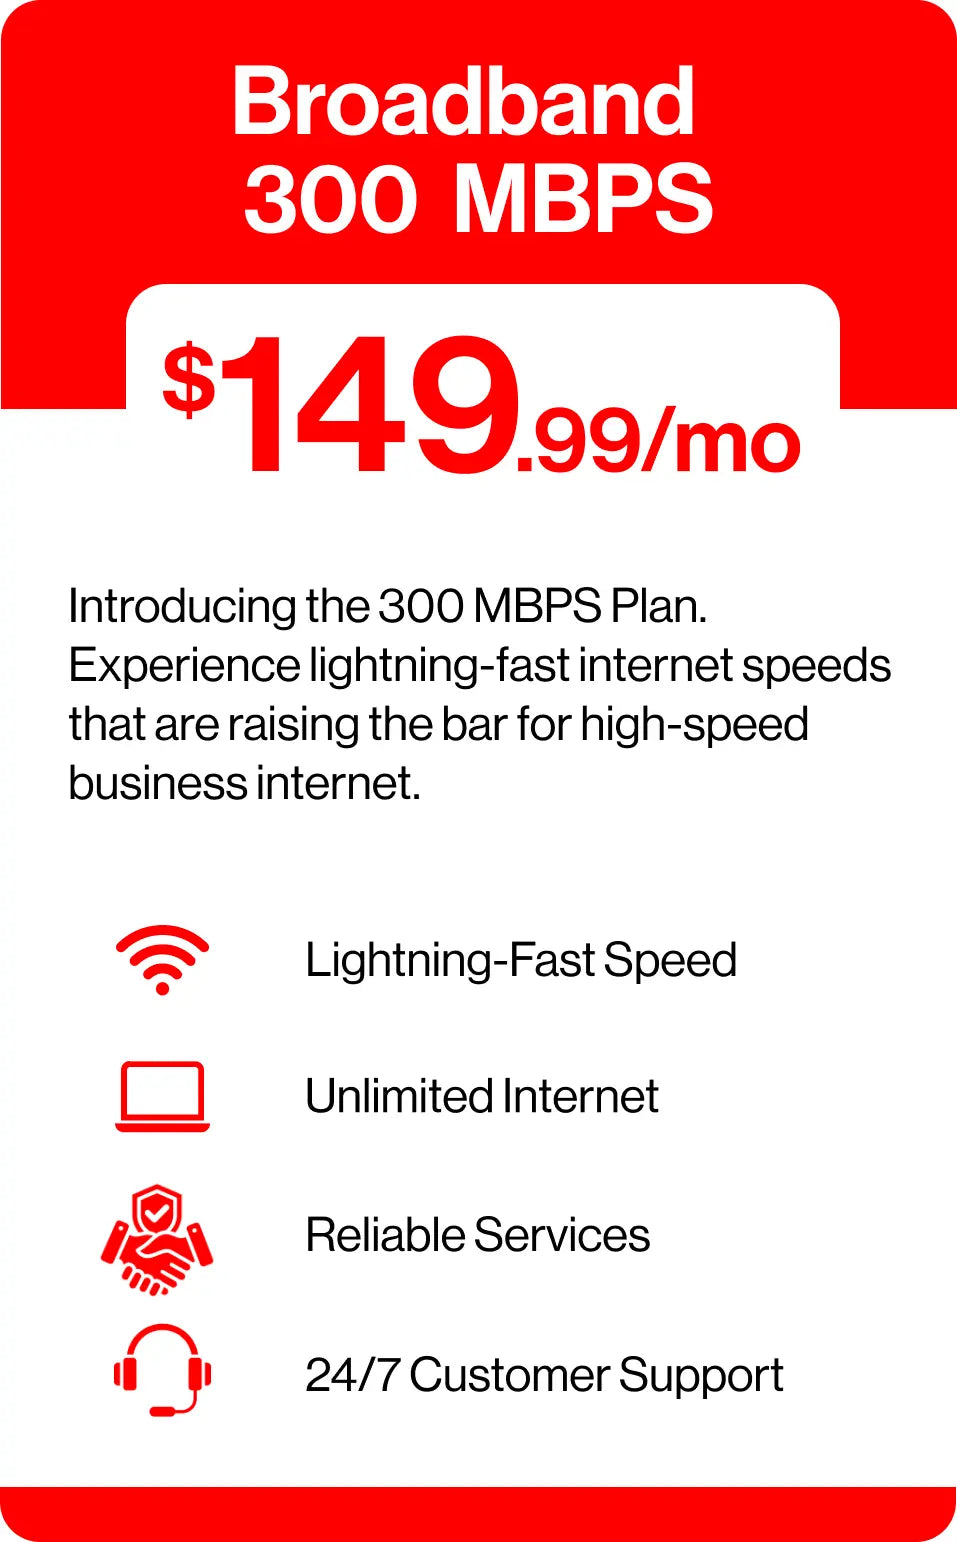 Broadband 300 MBPS